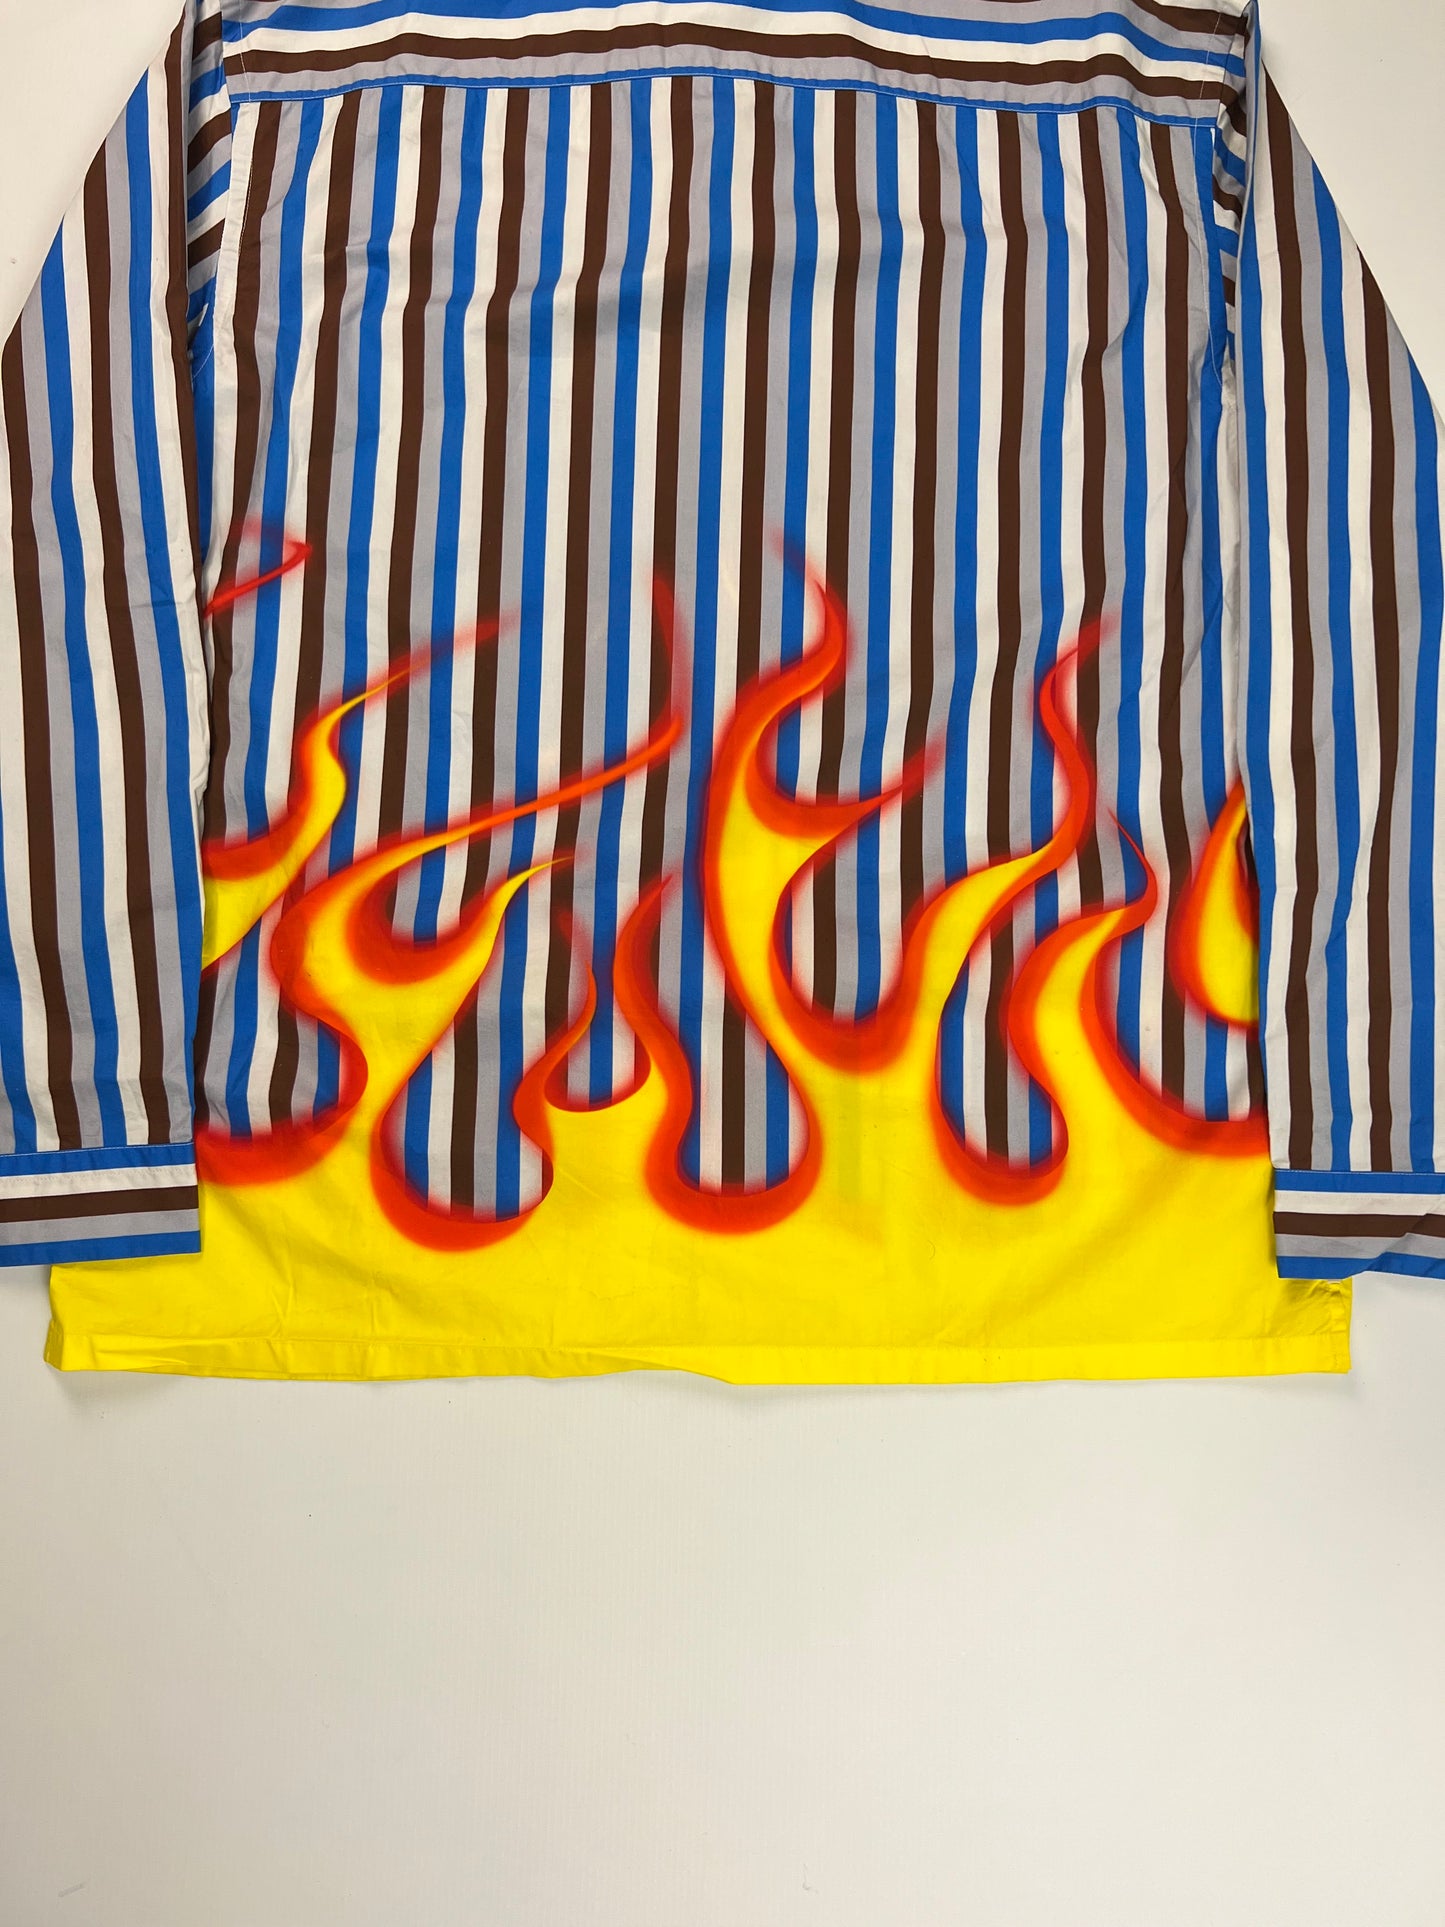 The Prada Flame Shirt Is Performance Art